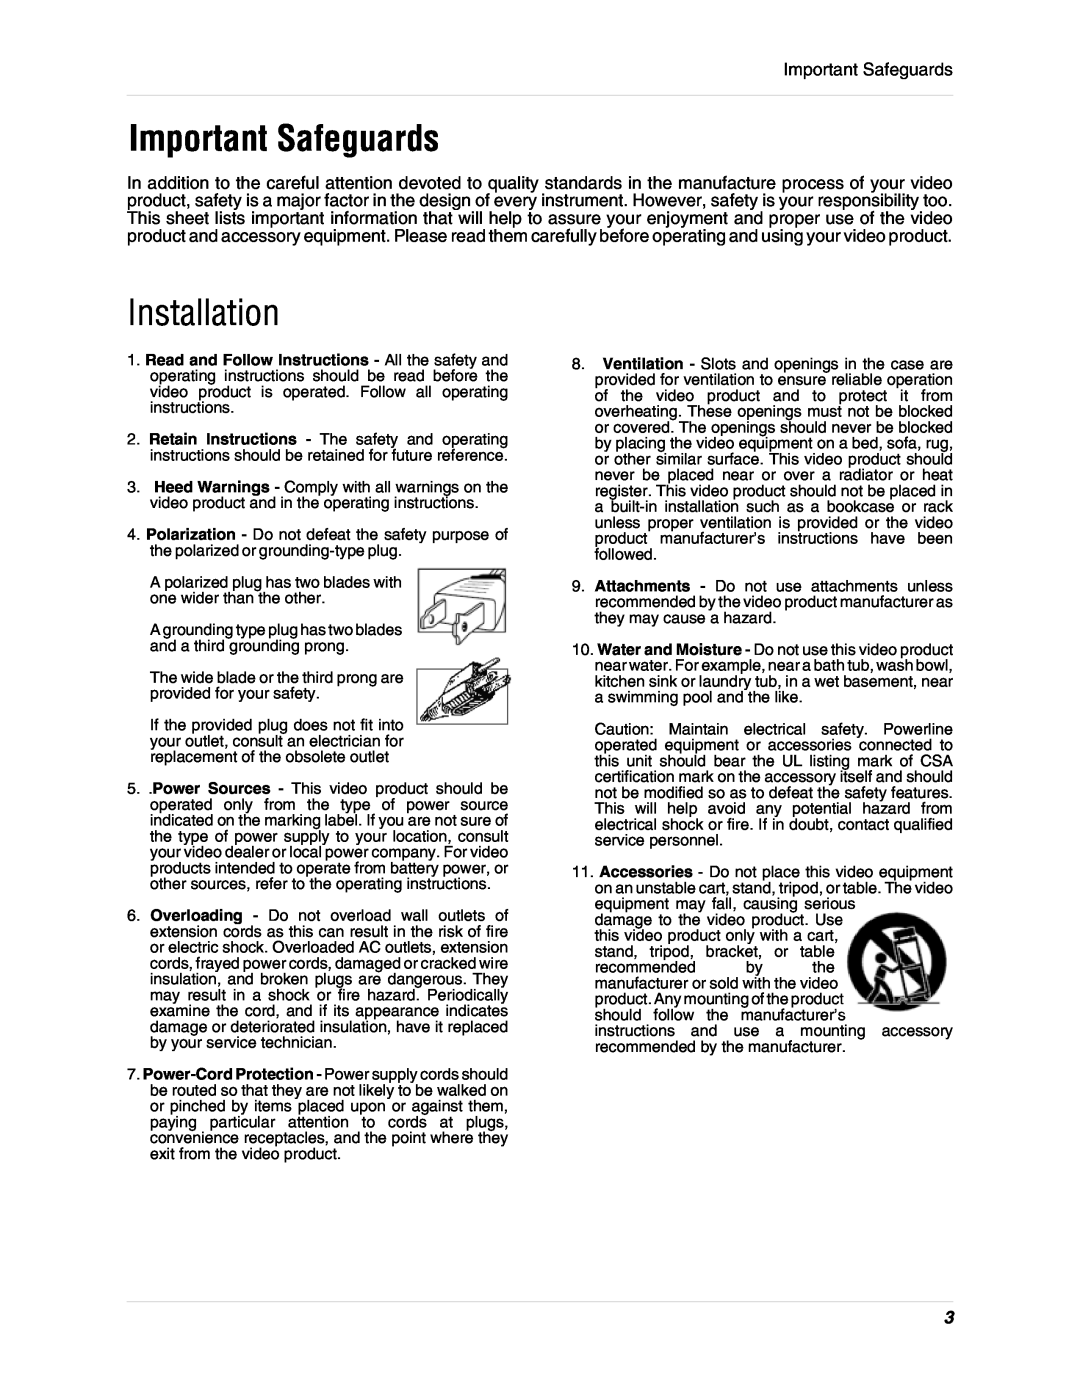 LOREX Technology L19lD1616501 instruction manual Important Safeguards, Installation 